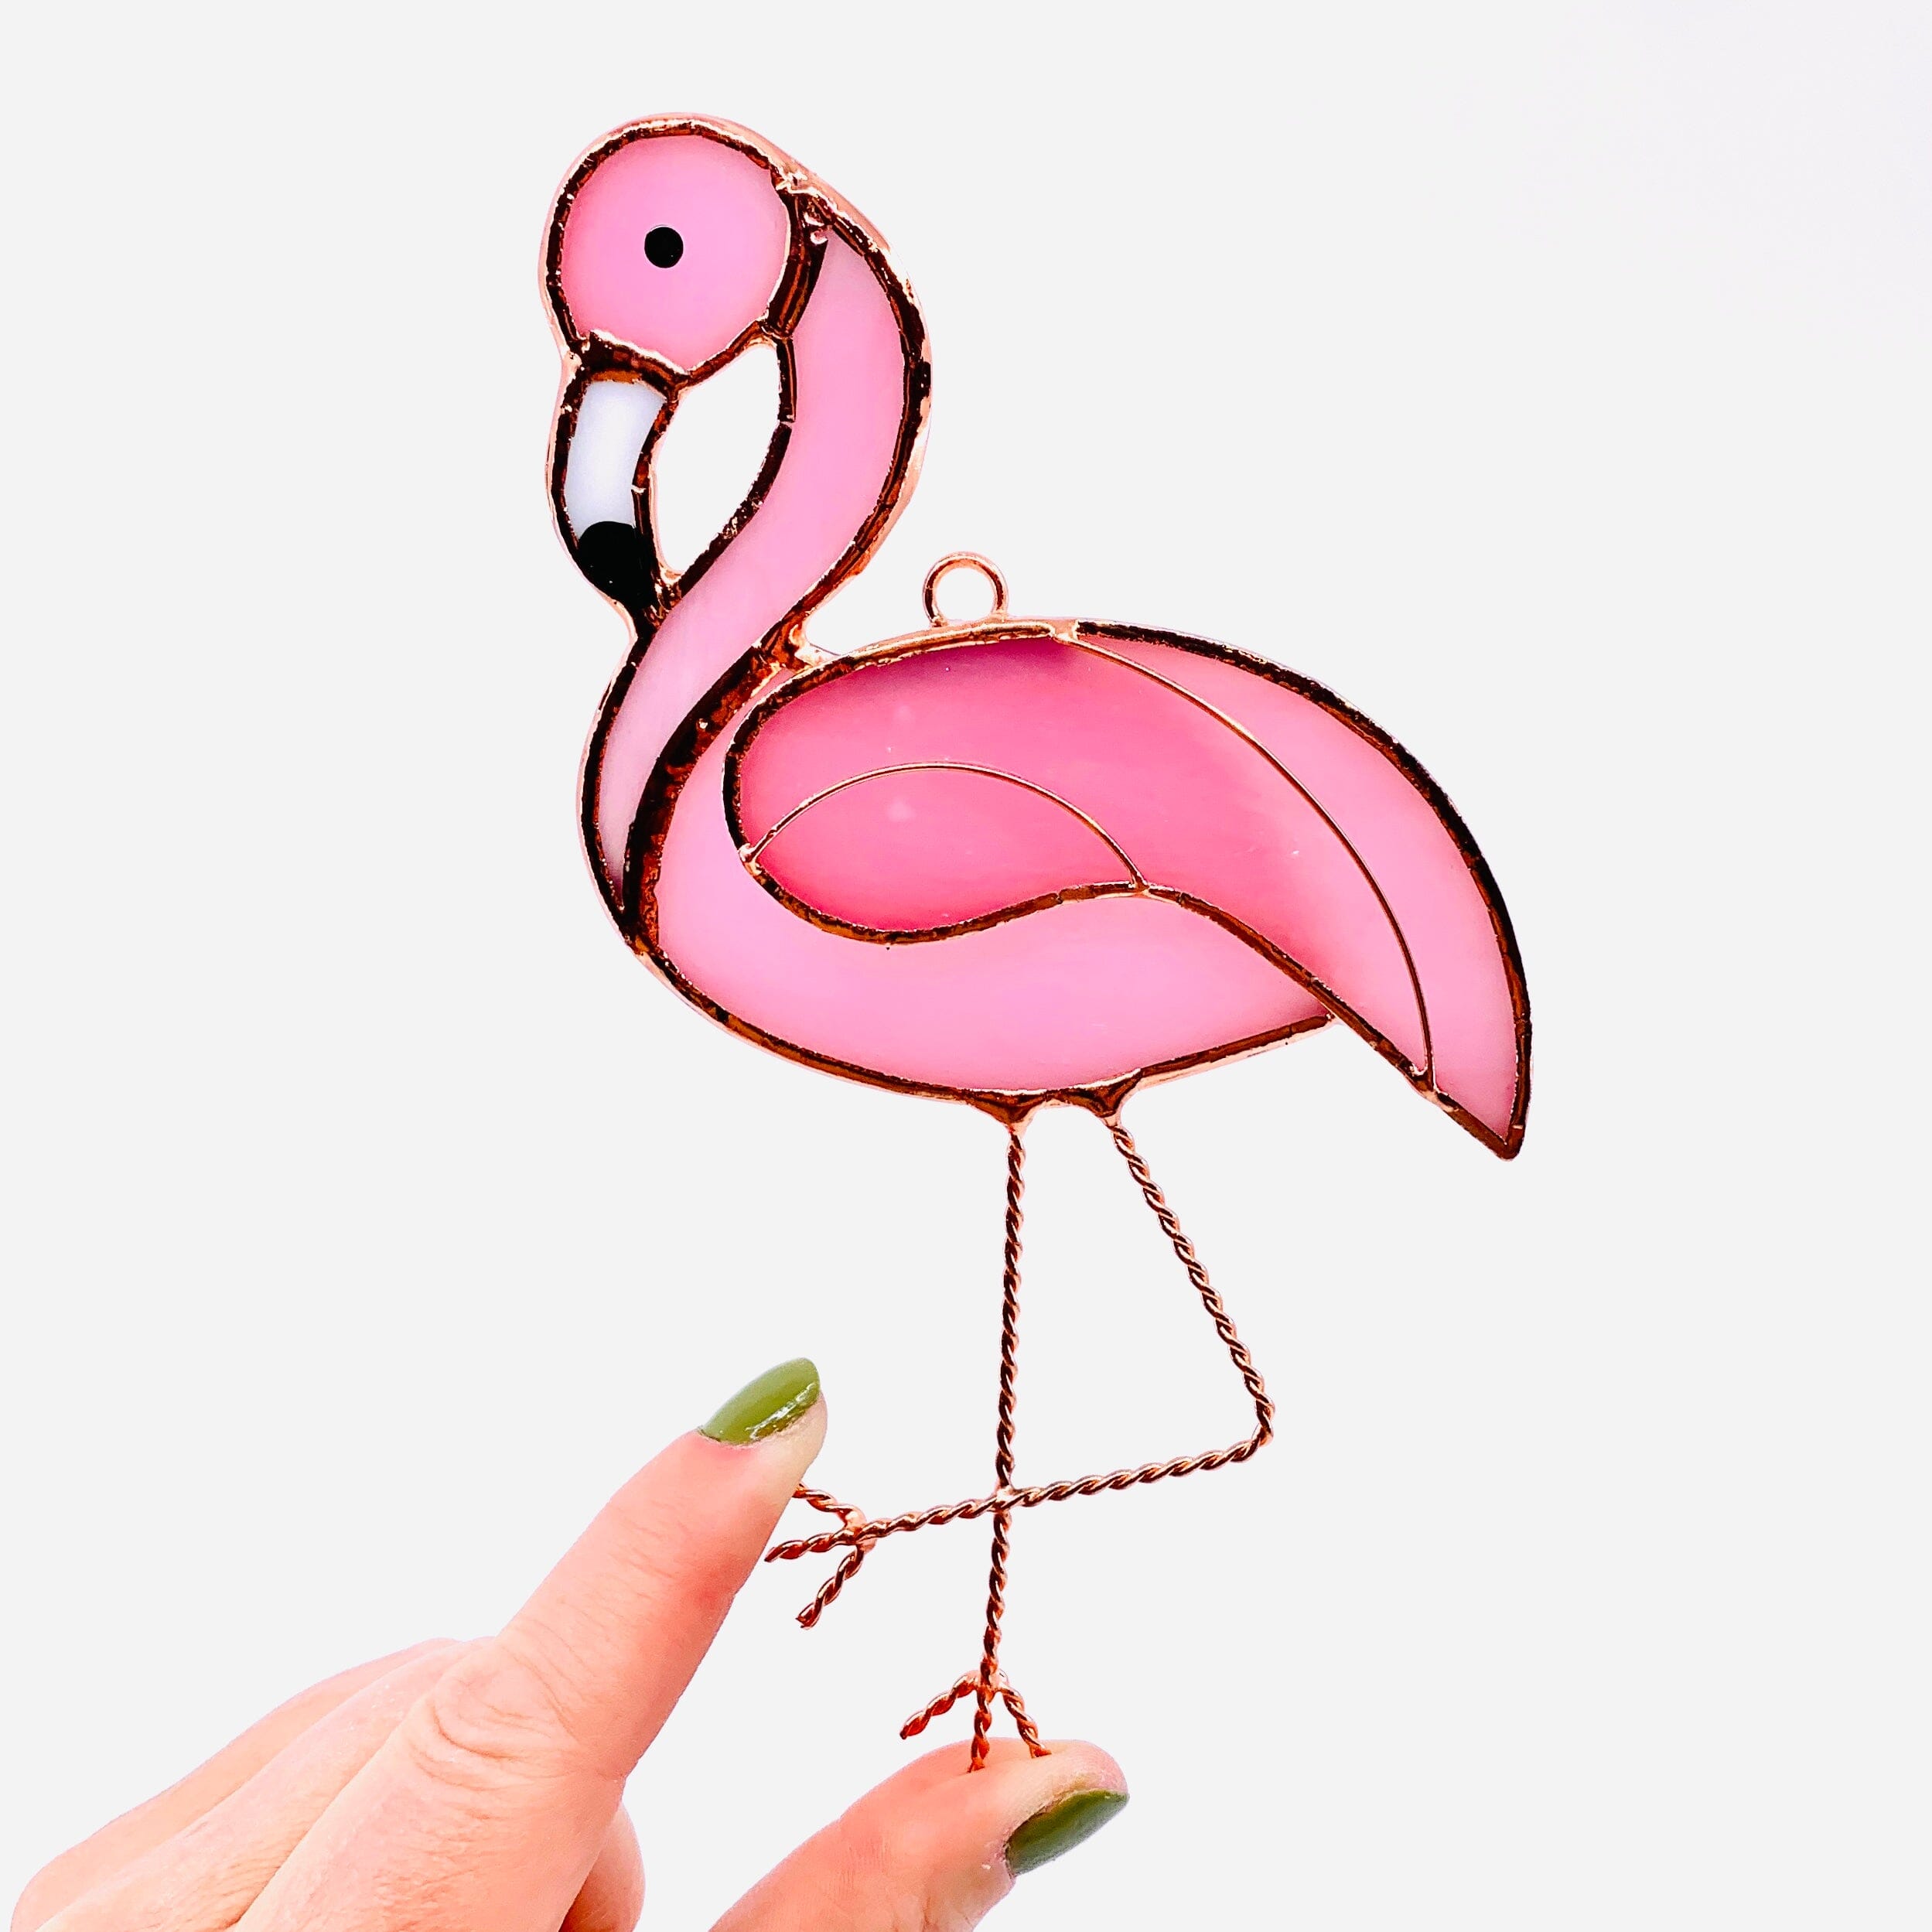 Koltose by Mash - Flamingo Suncatcher Kit, Window & Sticky Suncatcher Art for Boys & Girls Ages 3-14